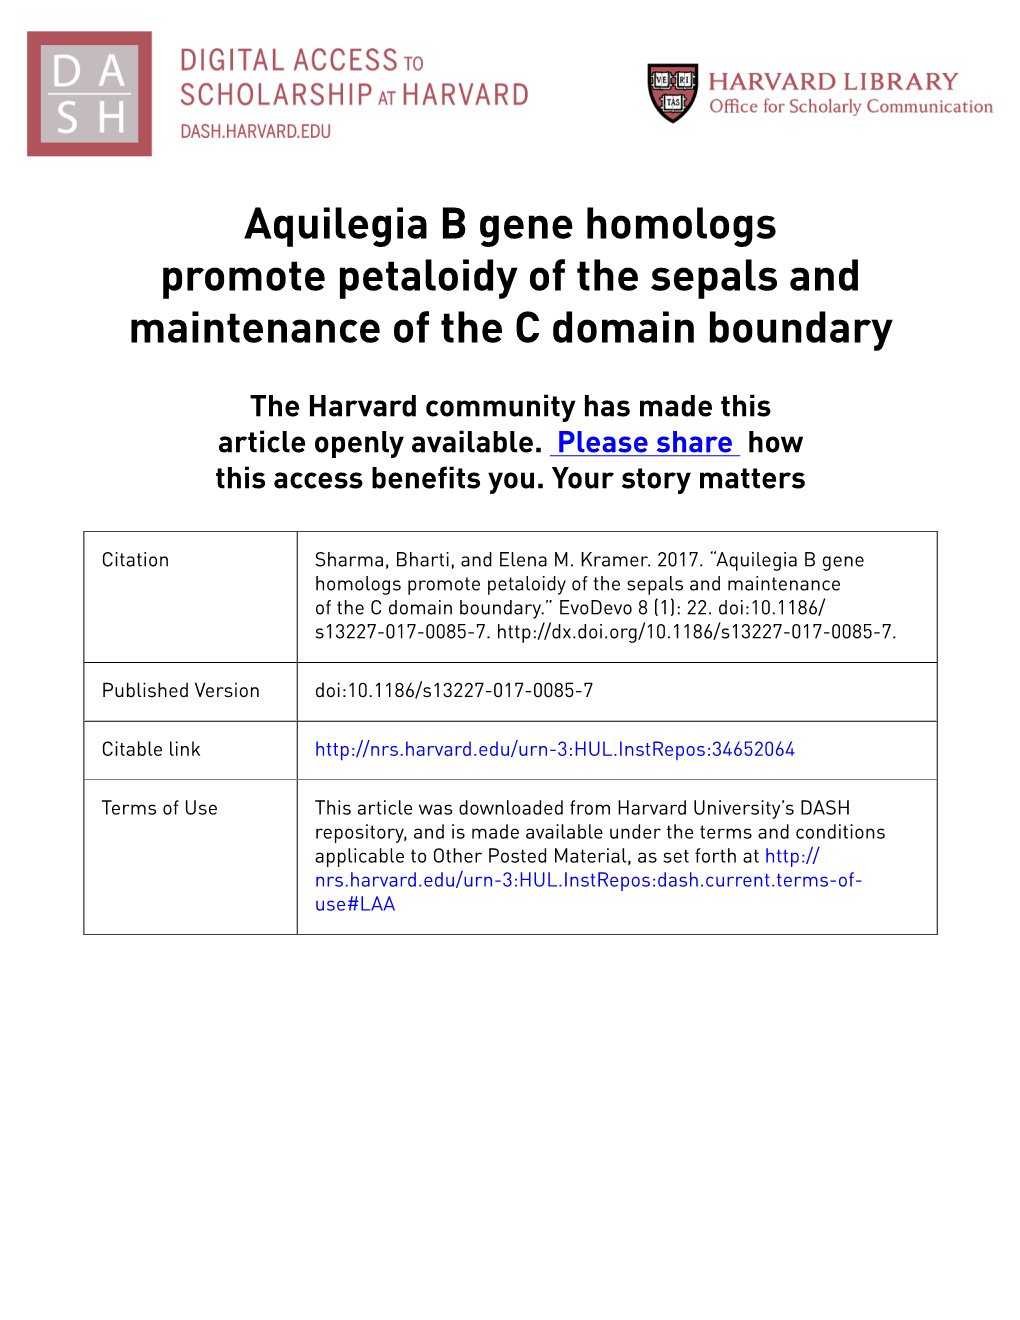 Aquilegia B Gene Homologs Promote Petaloidy of the Sepals and Maintenance of the C Domain Boundary